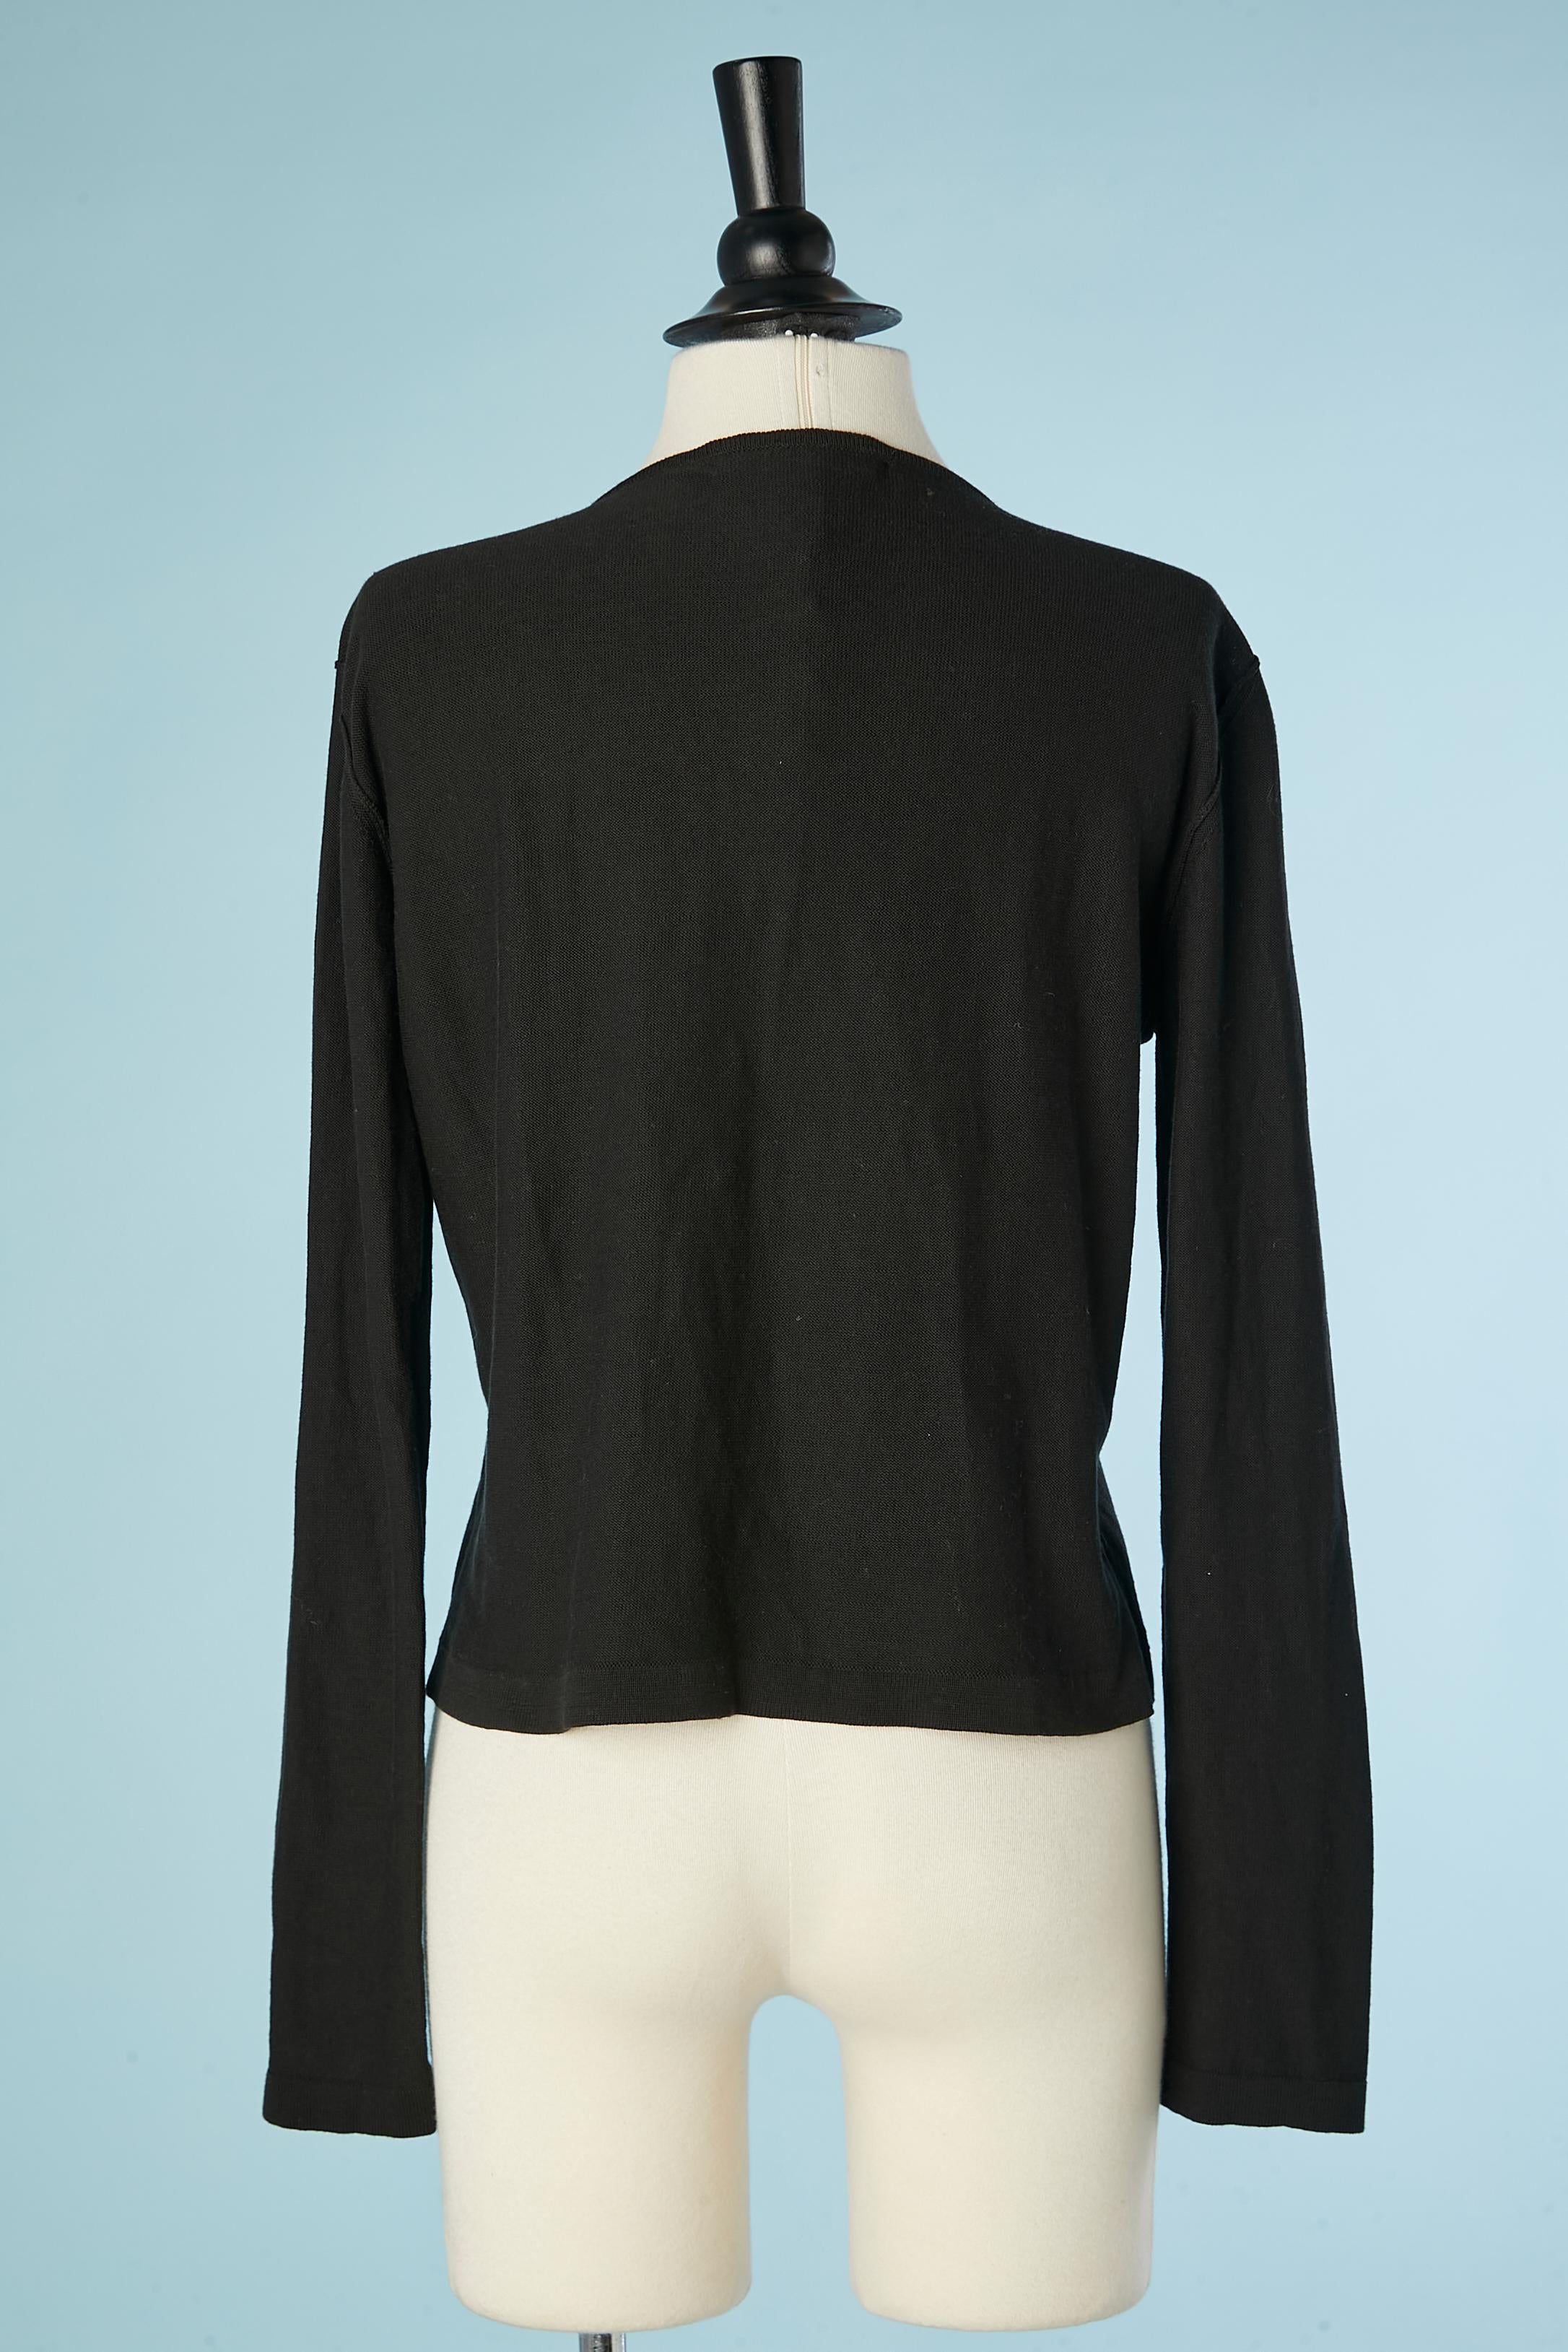 Women's Black cotton knit evening cardigan with rhinestone embellishment Sonia Rykiell  For Sale